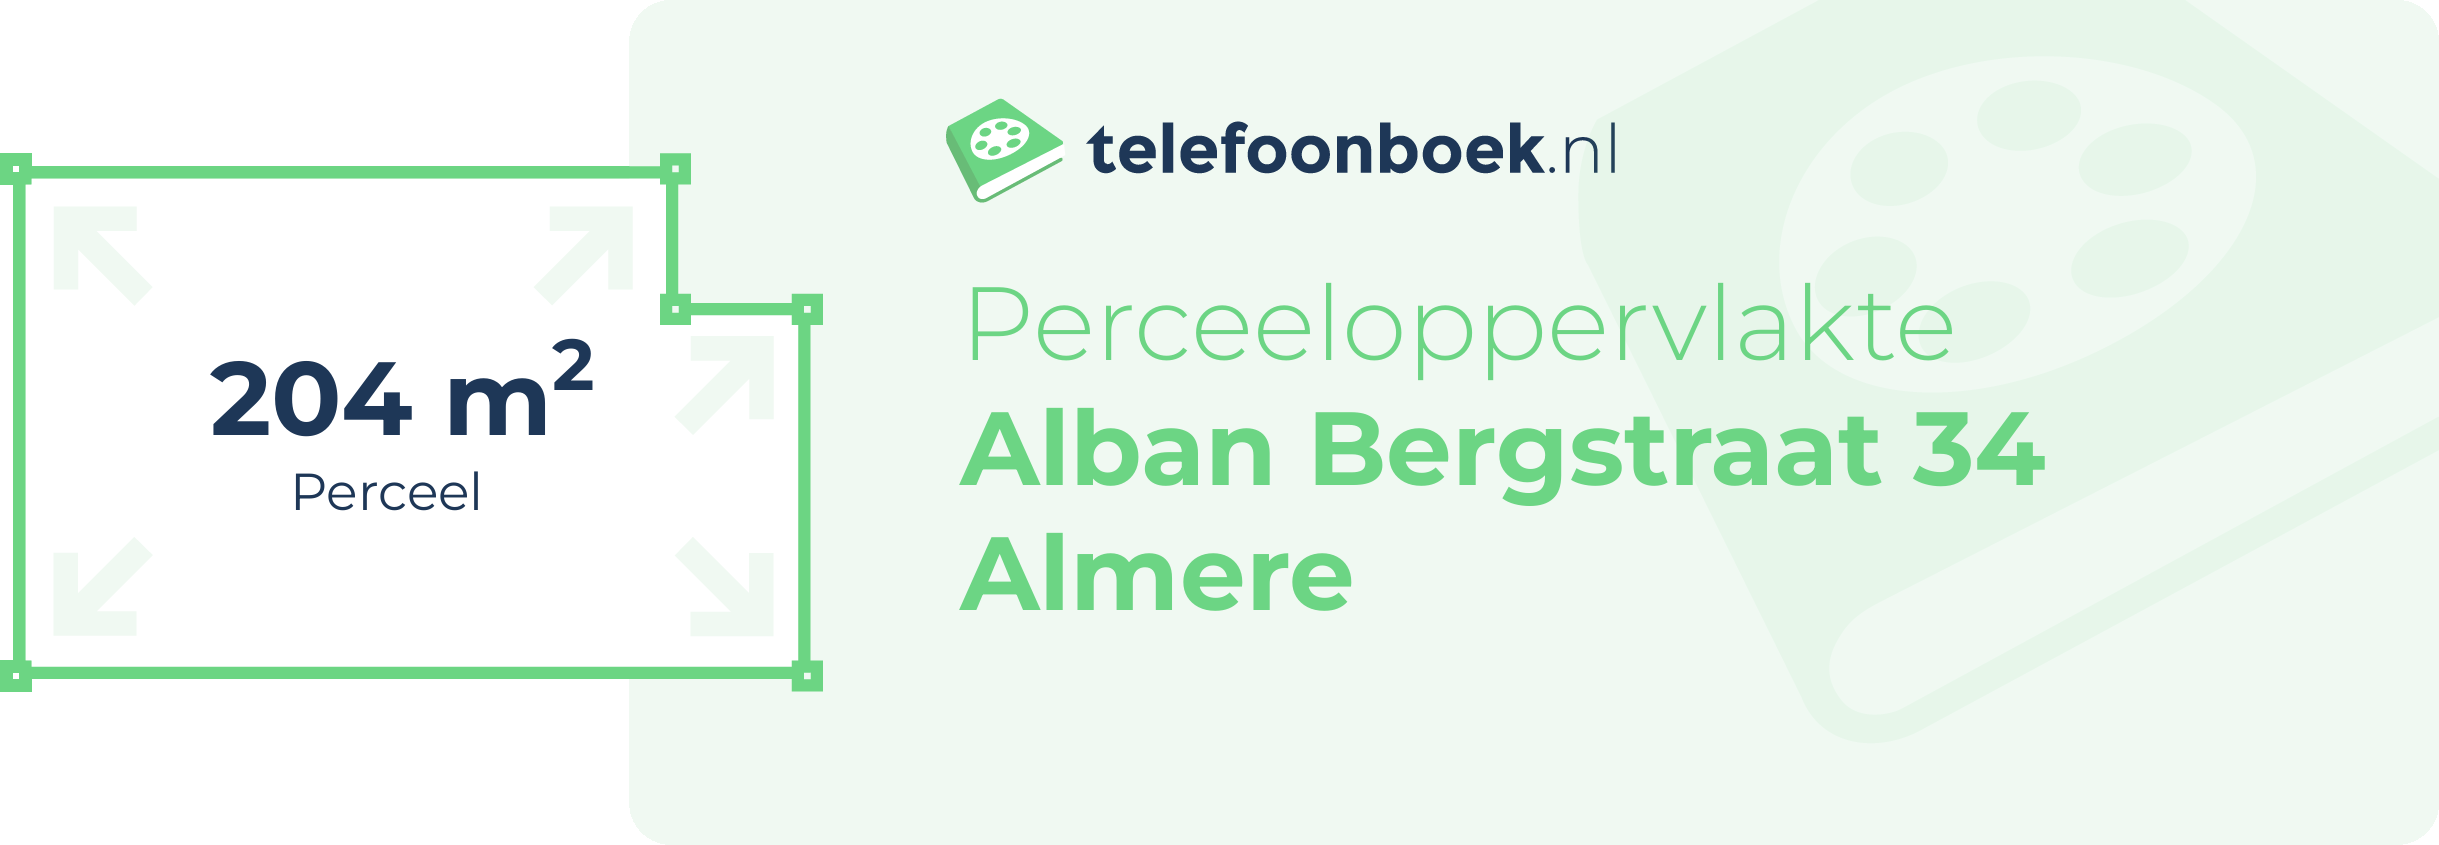 Perceeloppervlakte Alban Bergstraat 34 Almere